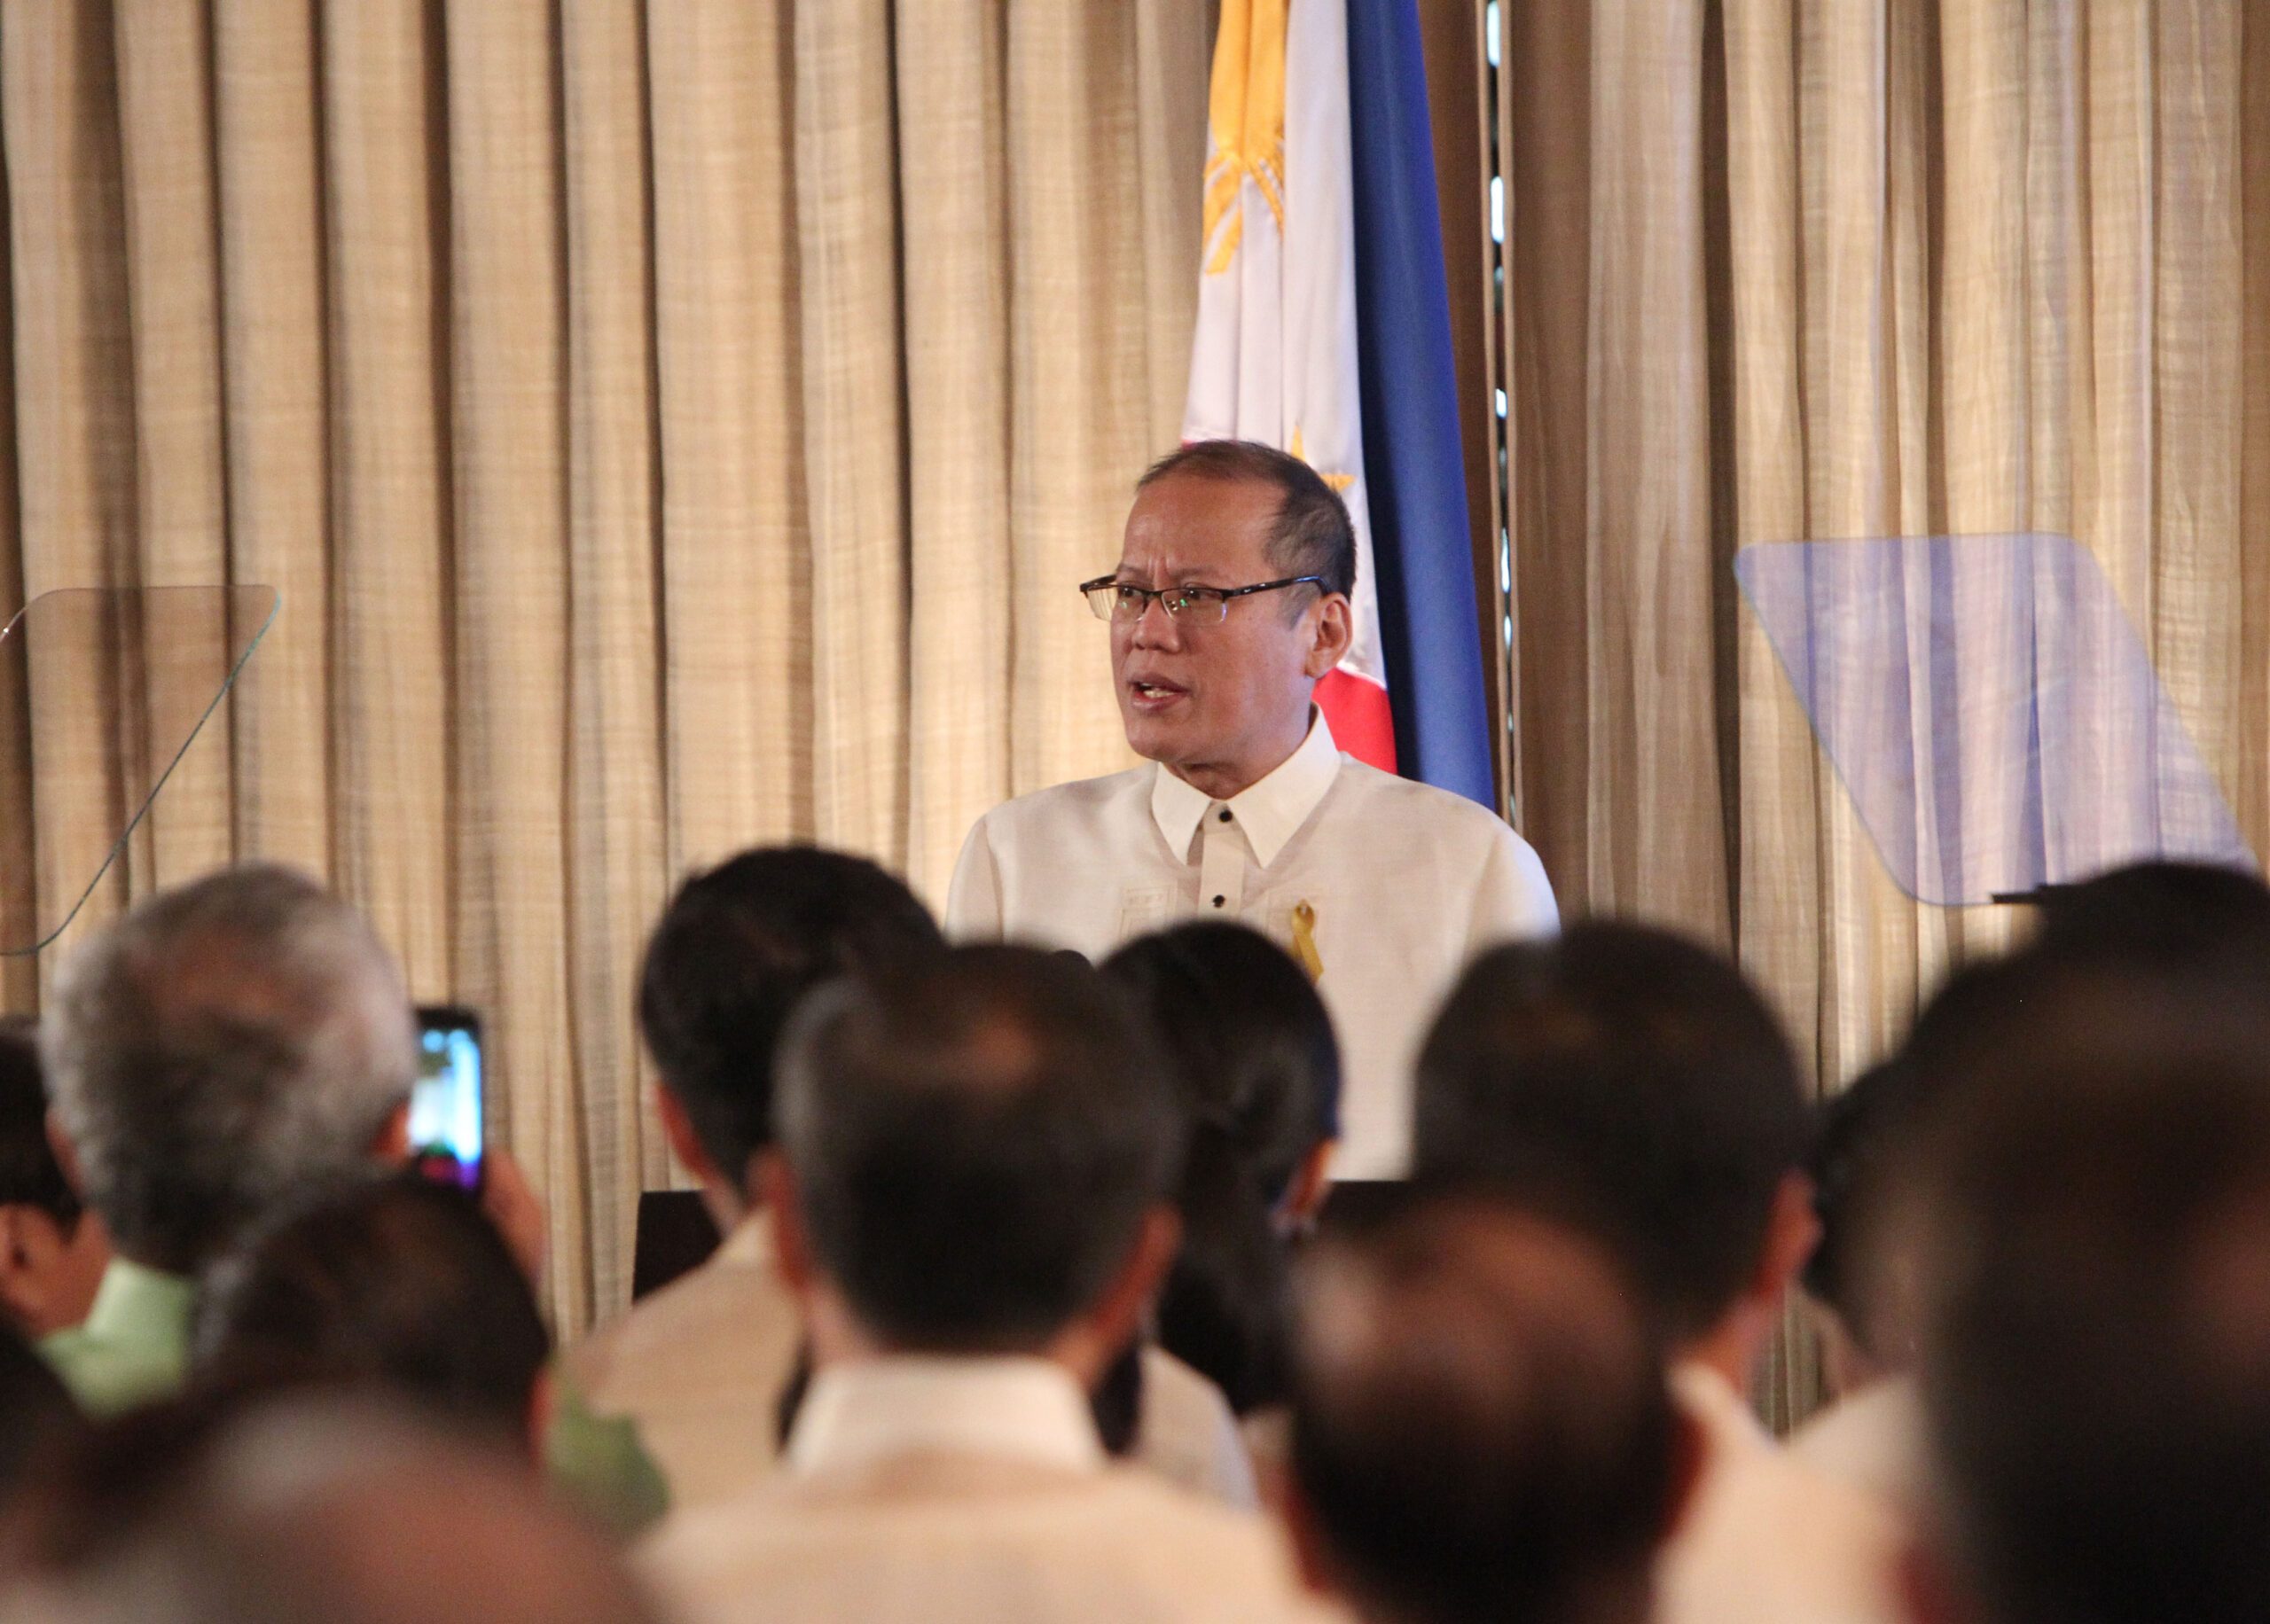 Noynoy Aquino indicted for graft over Mamasapano